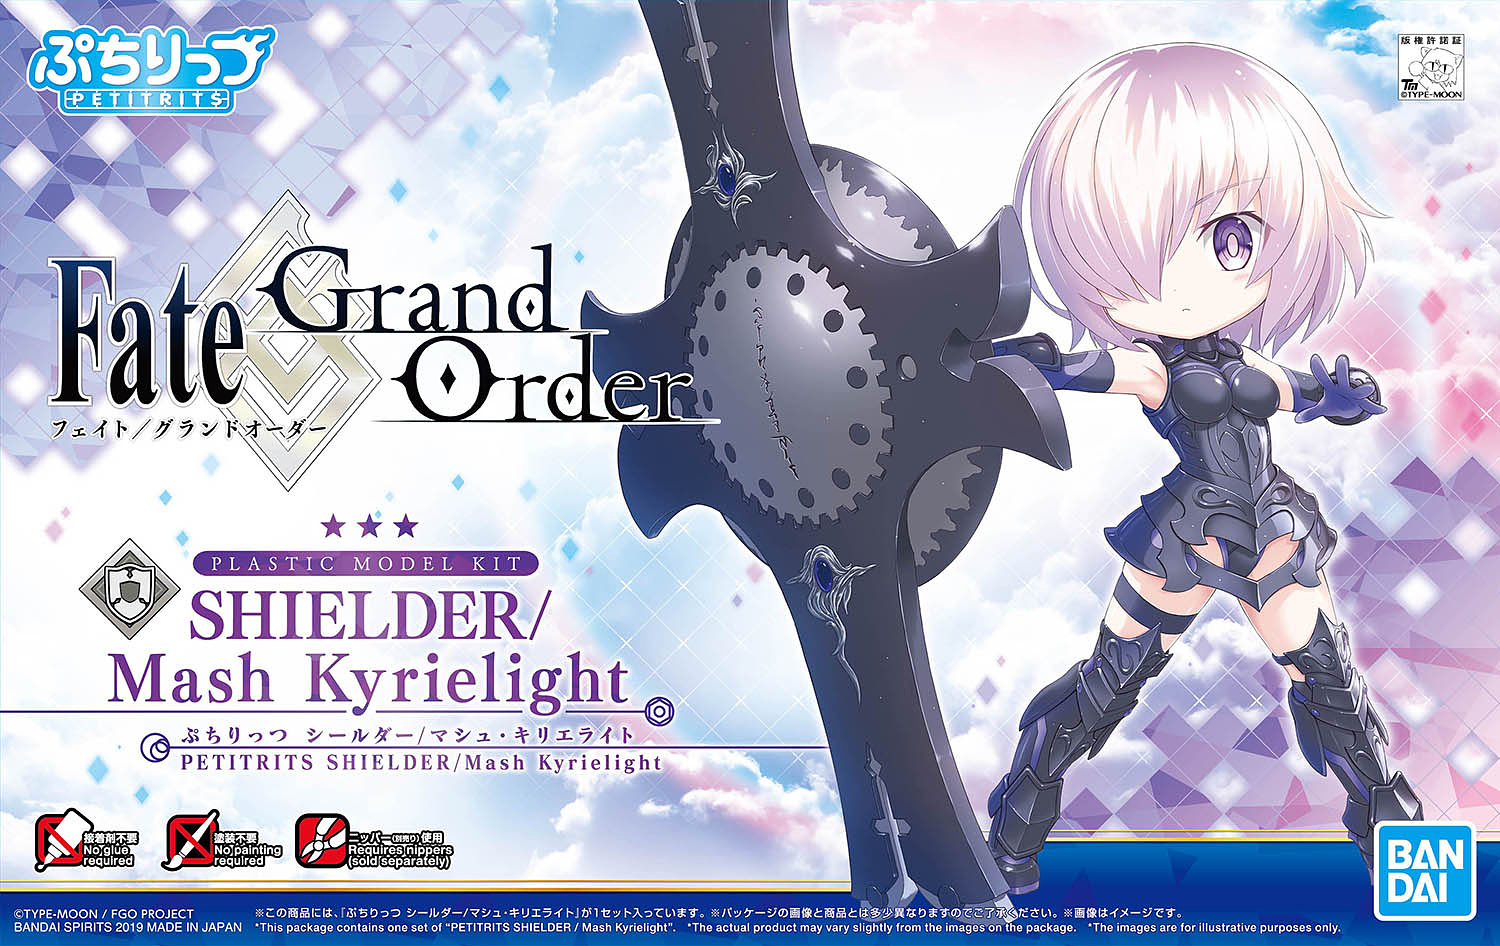 Fate Grand Order: Petitrits Shielder - Mash Kyrielight